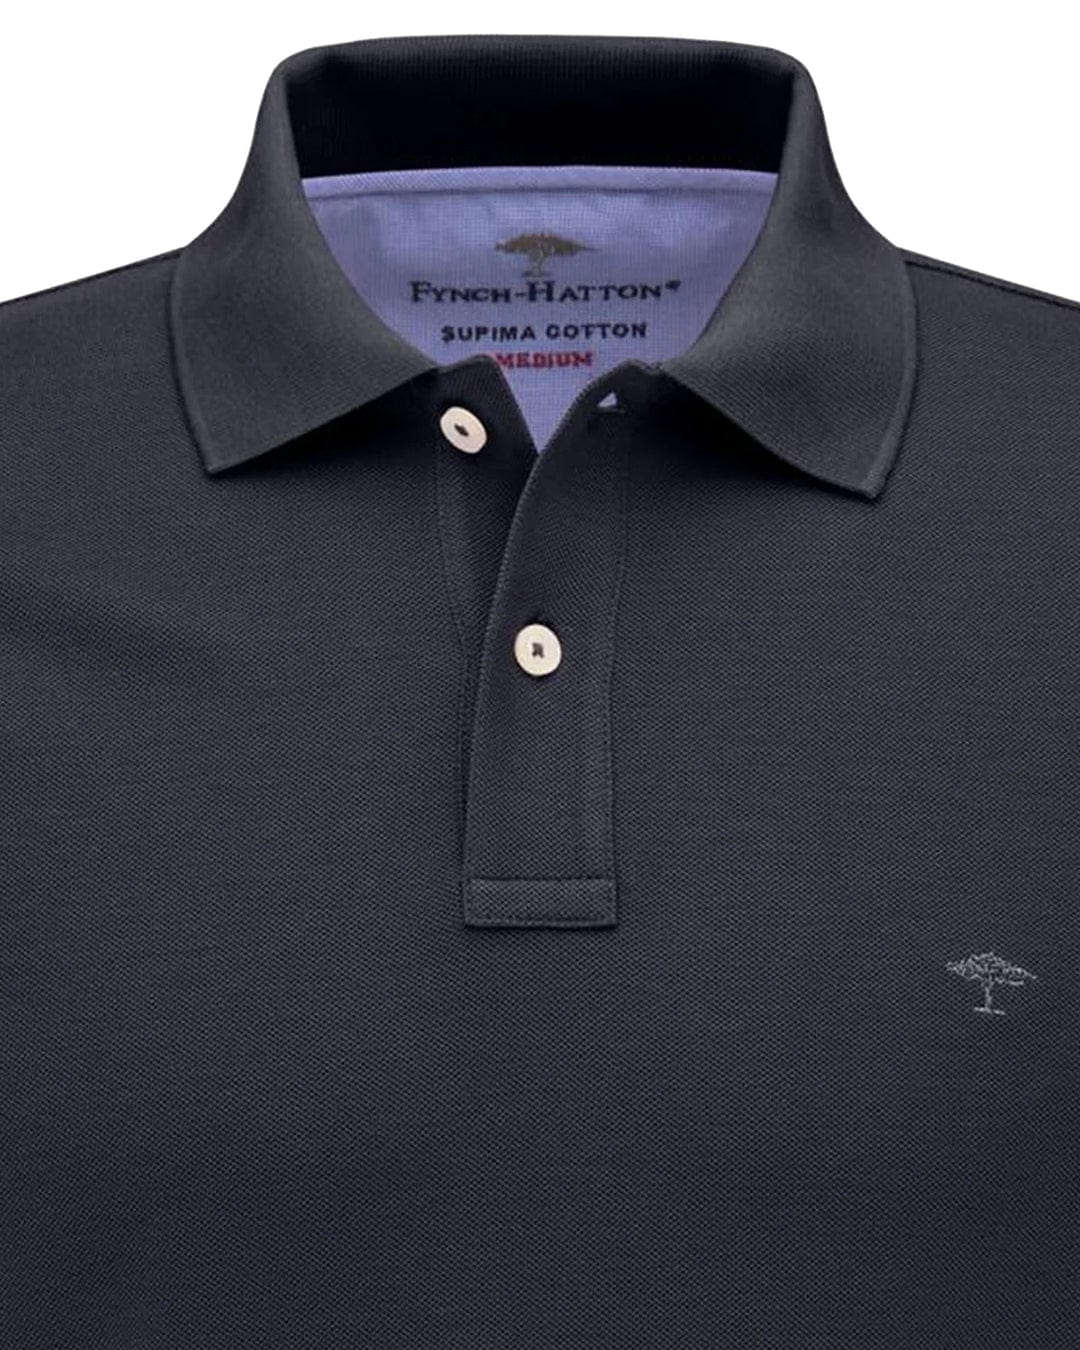 Fynch-Hatton Polo Shirts Fynch-Hatton Classic Supima Cotton Navy Polo Shirt